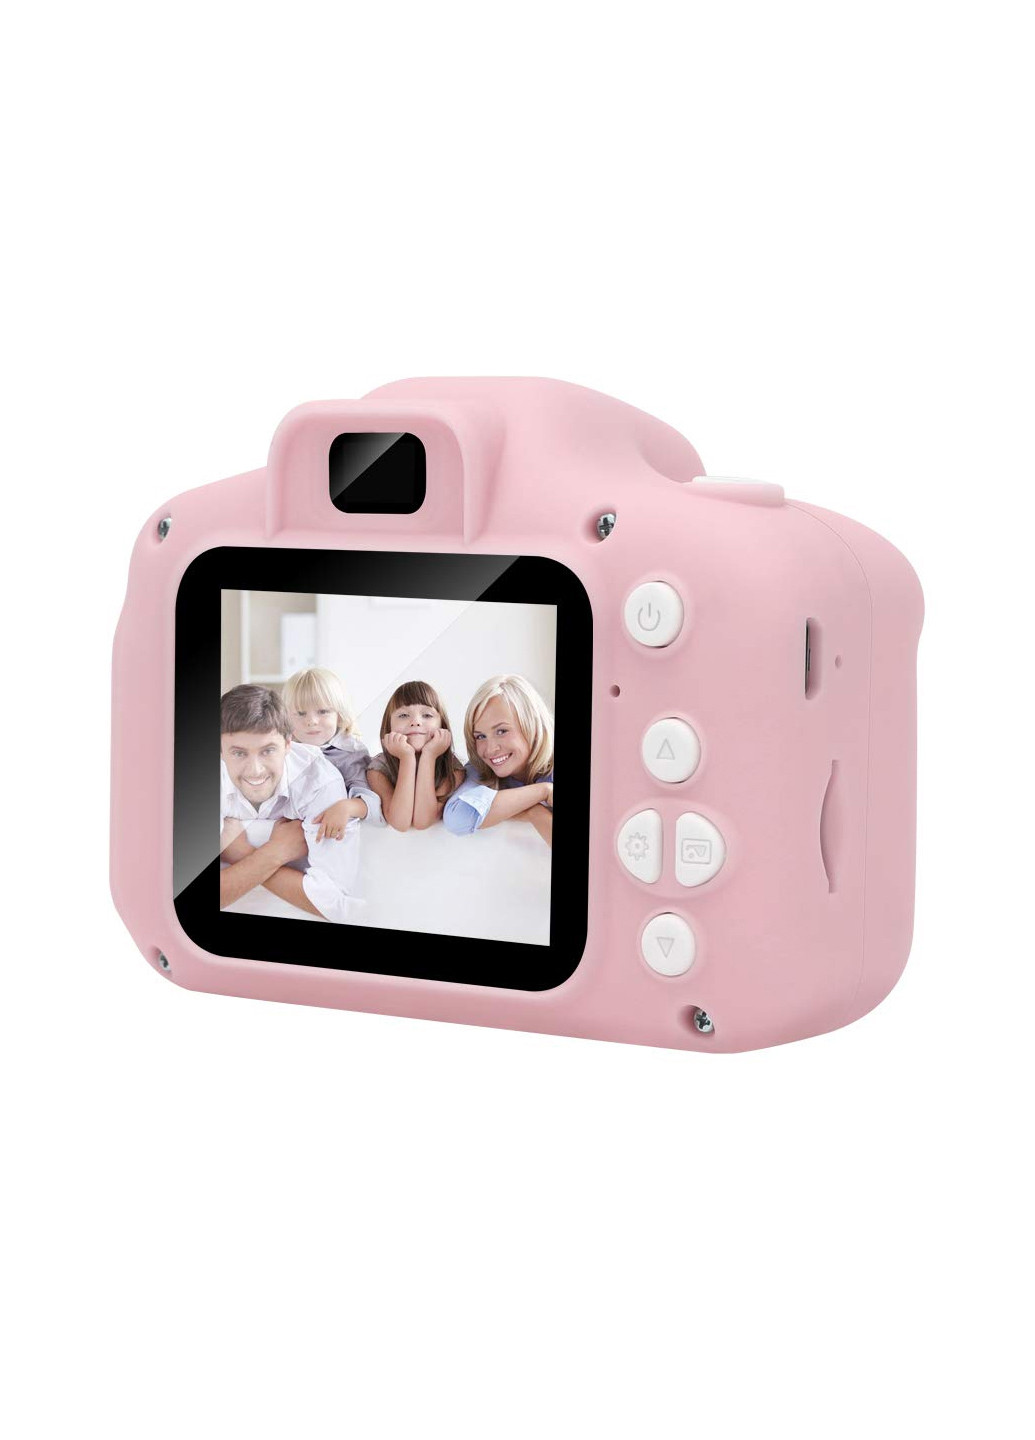 Детский цифровой фотоаппарат Model X Pink UFT G-SIO Model X Blue розовый